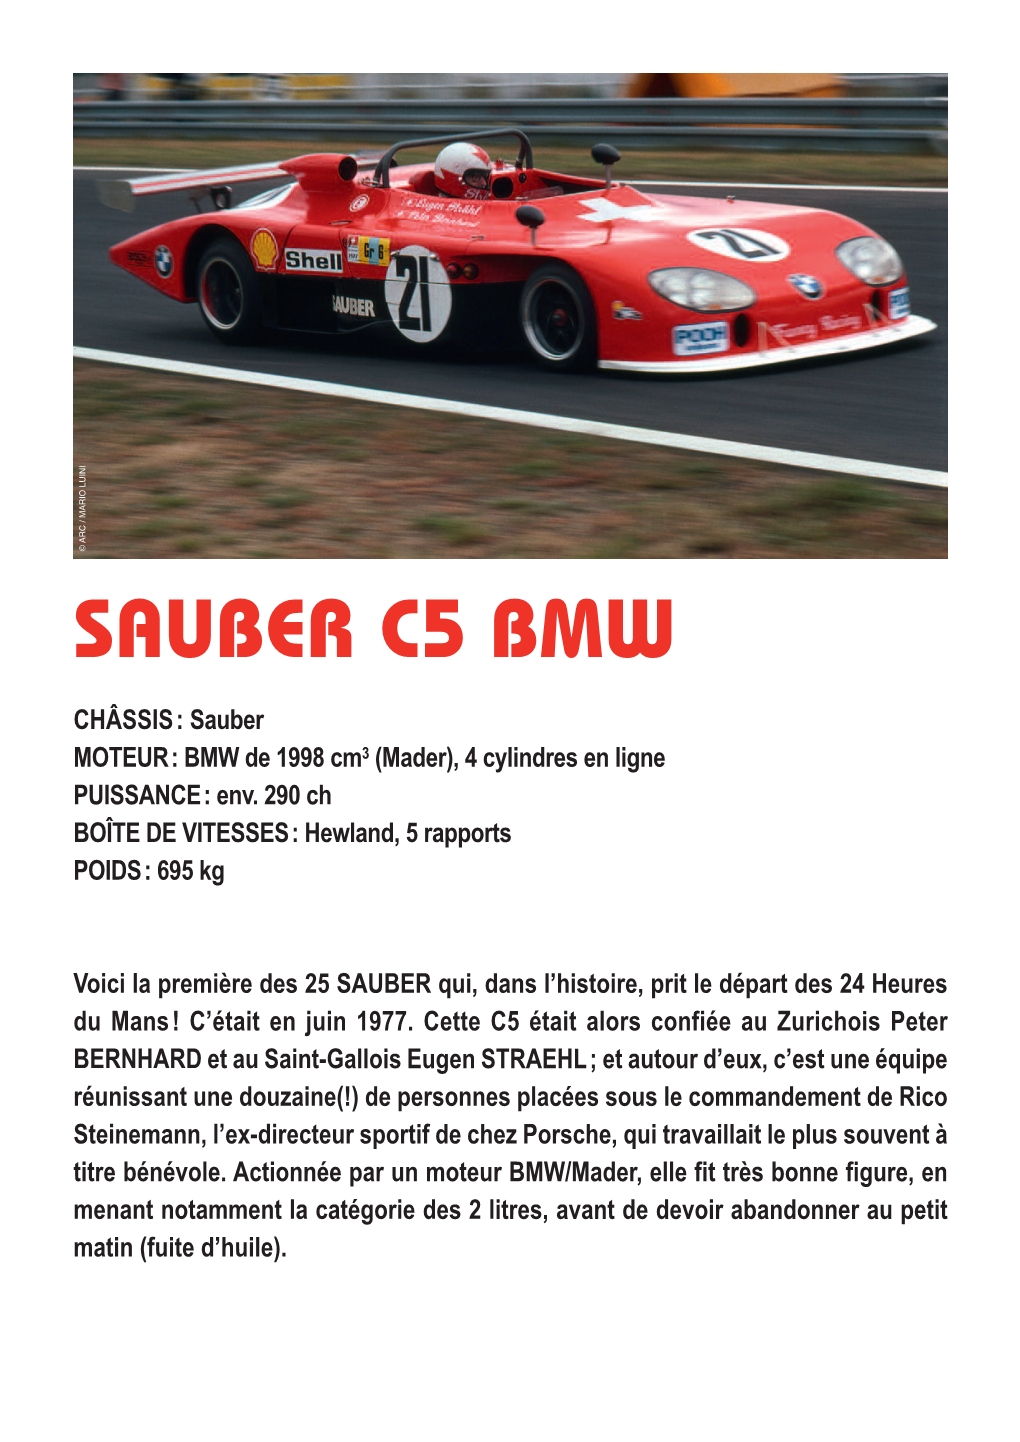 Sauber C5 Bmw